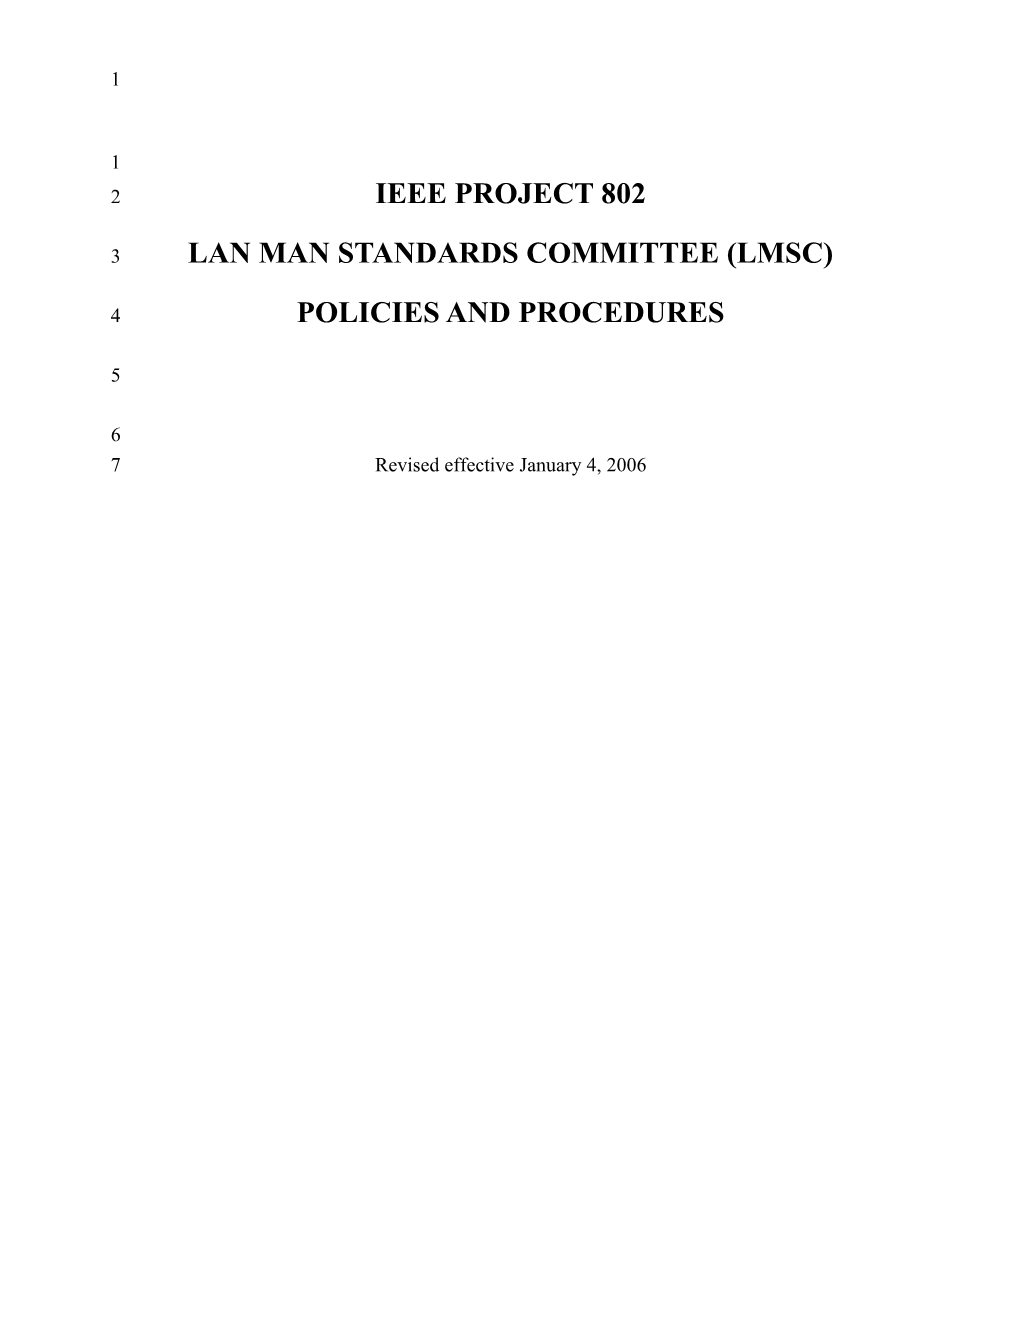 IEEE PROJECT 802 LAN MAN STANDARDS COMMITTEE (LMSC) POLICIES and PROCEDURES, Revised Effective s2